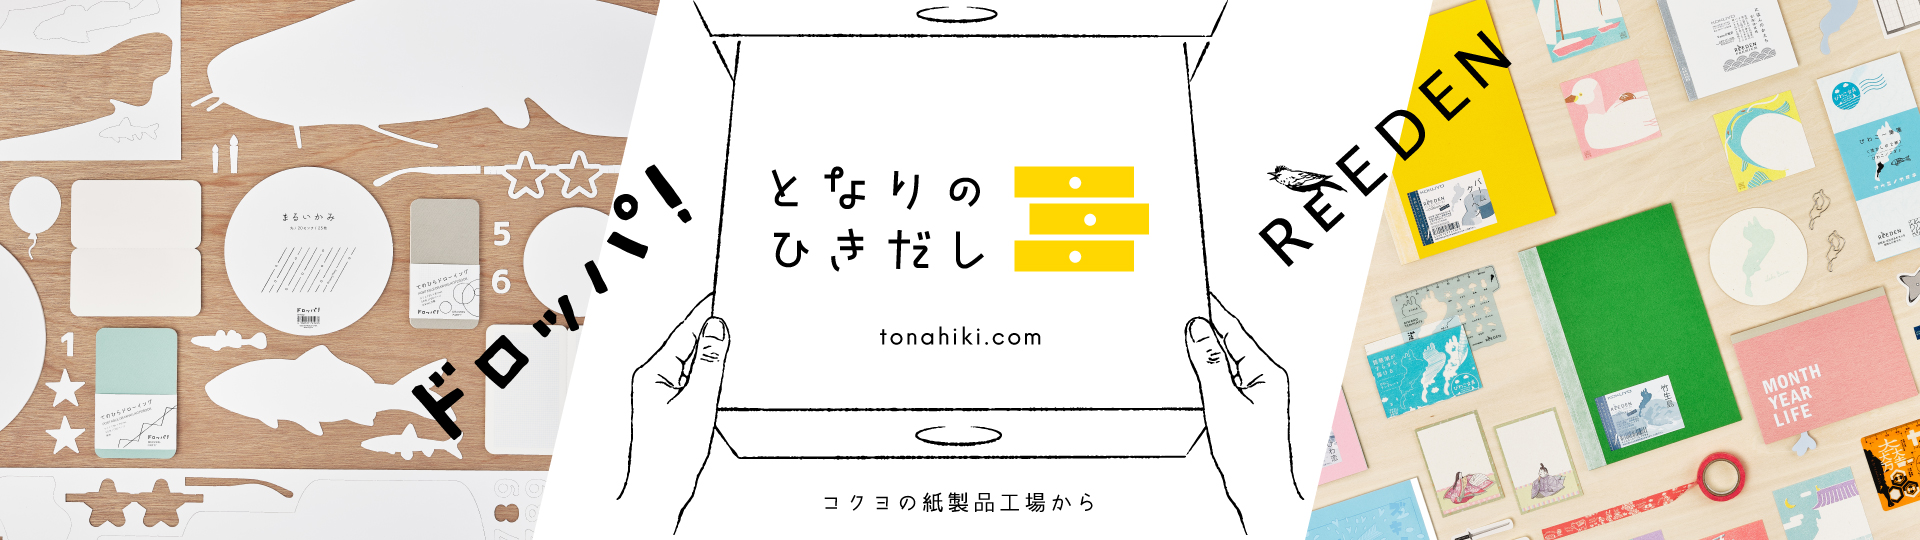 www.kokuyo.co.jp/img/top_slide_tonahiki.jpg